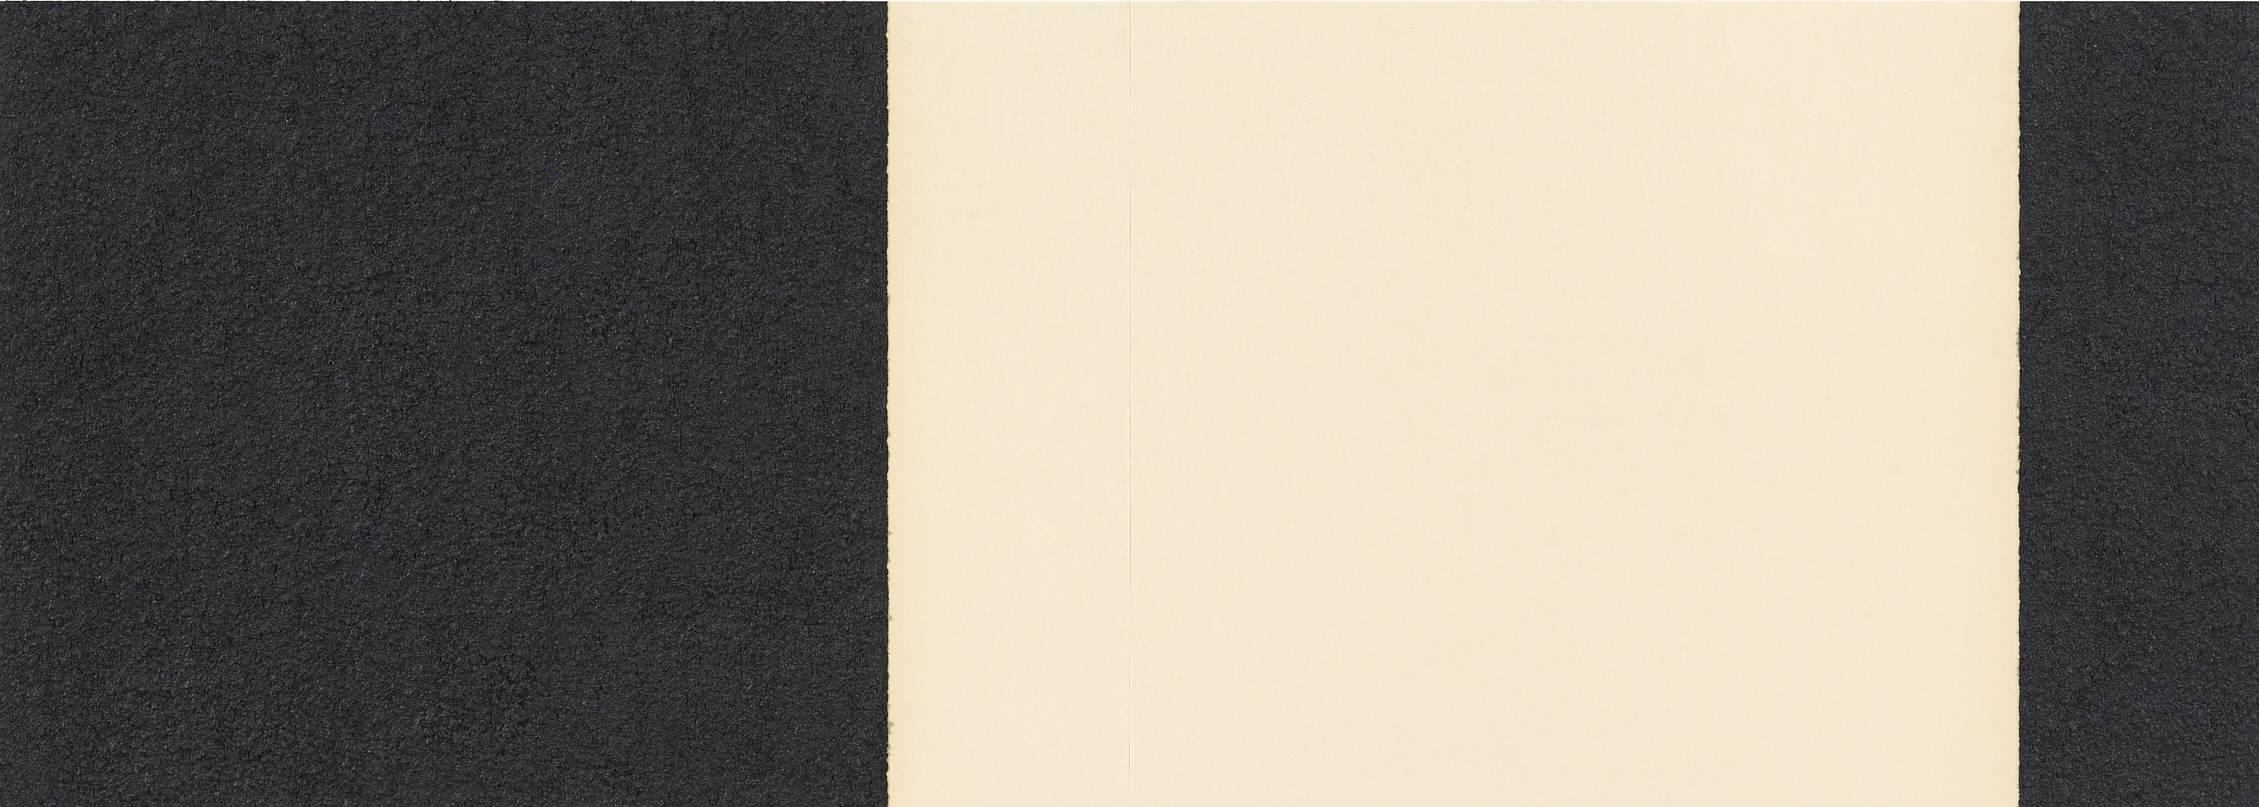 Richard Serra Print - Horizontal Reversal VIII